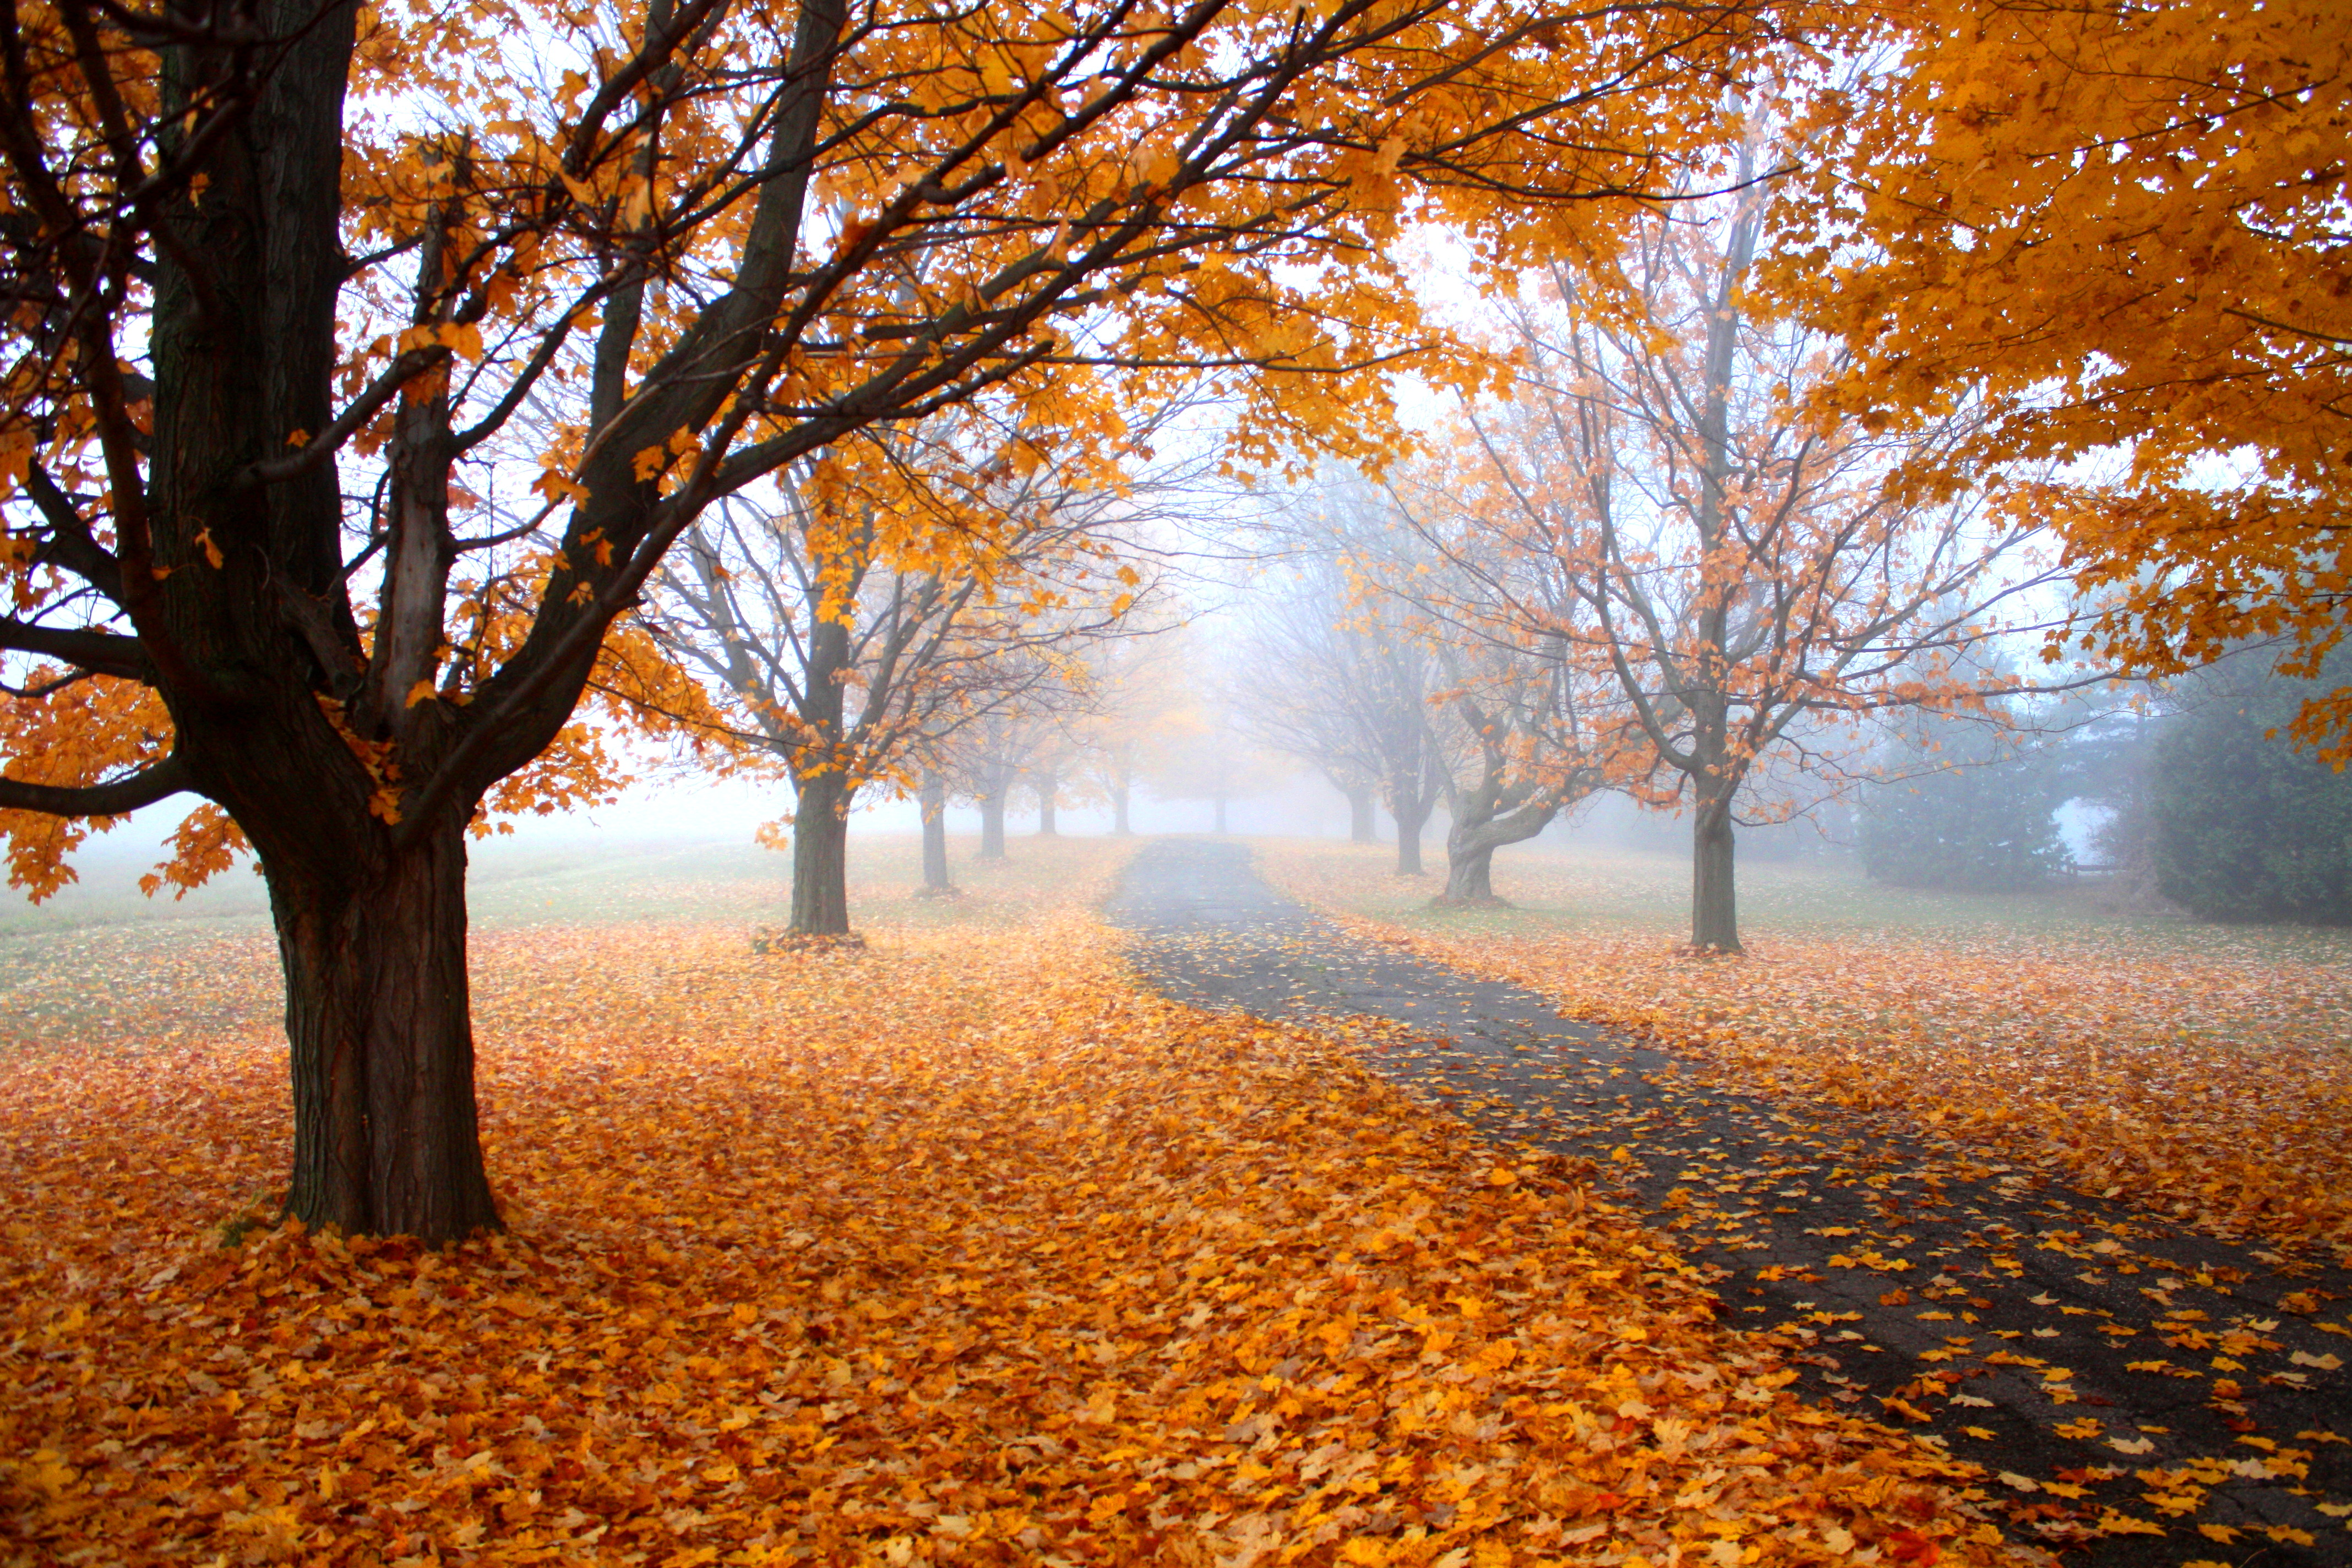 man made, path, fall, leaf, orange (color), sidewalk, tree